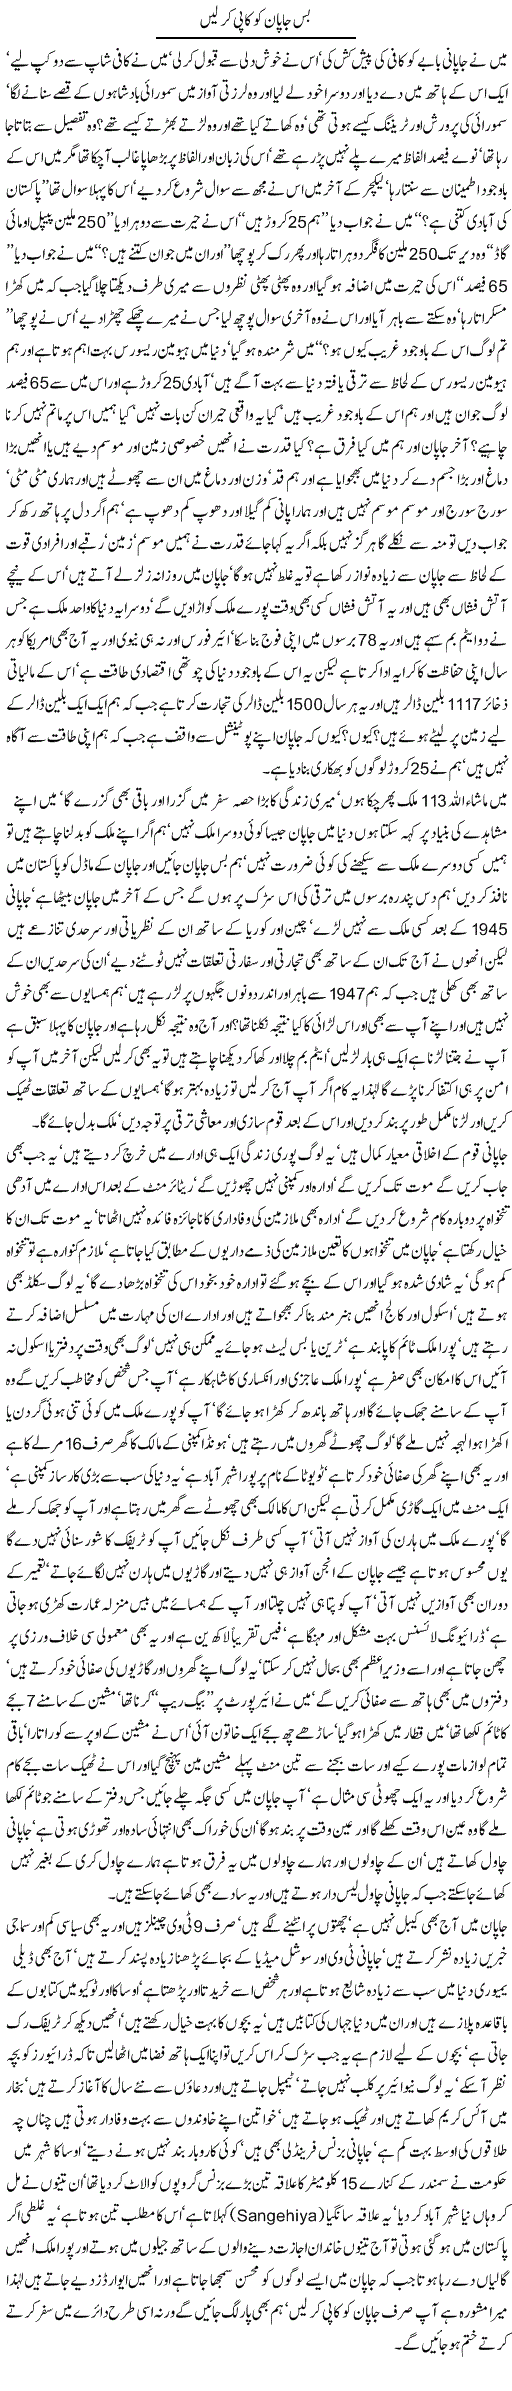 Javed Chaudhry Urdu Columns Japan Model of Progress & Youth of Pakistan